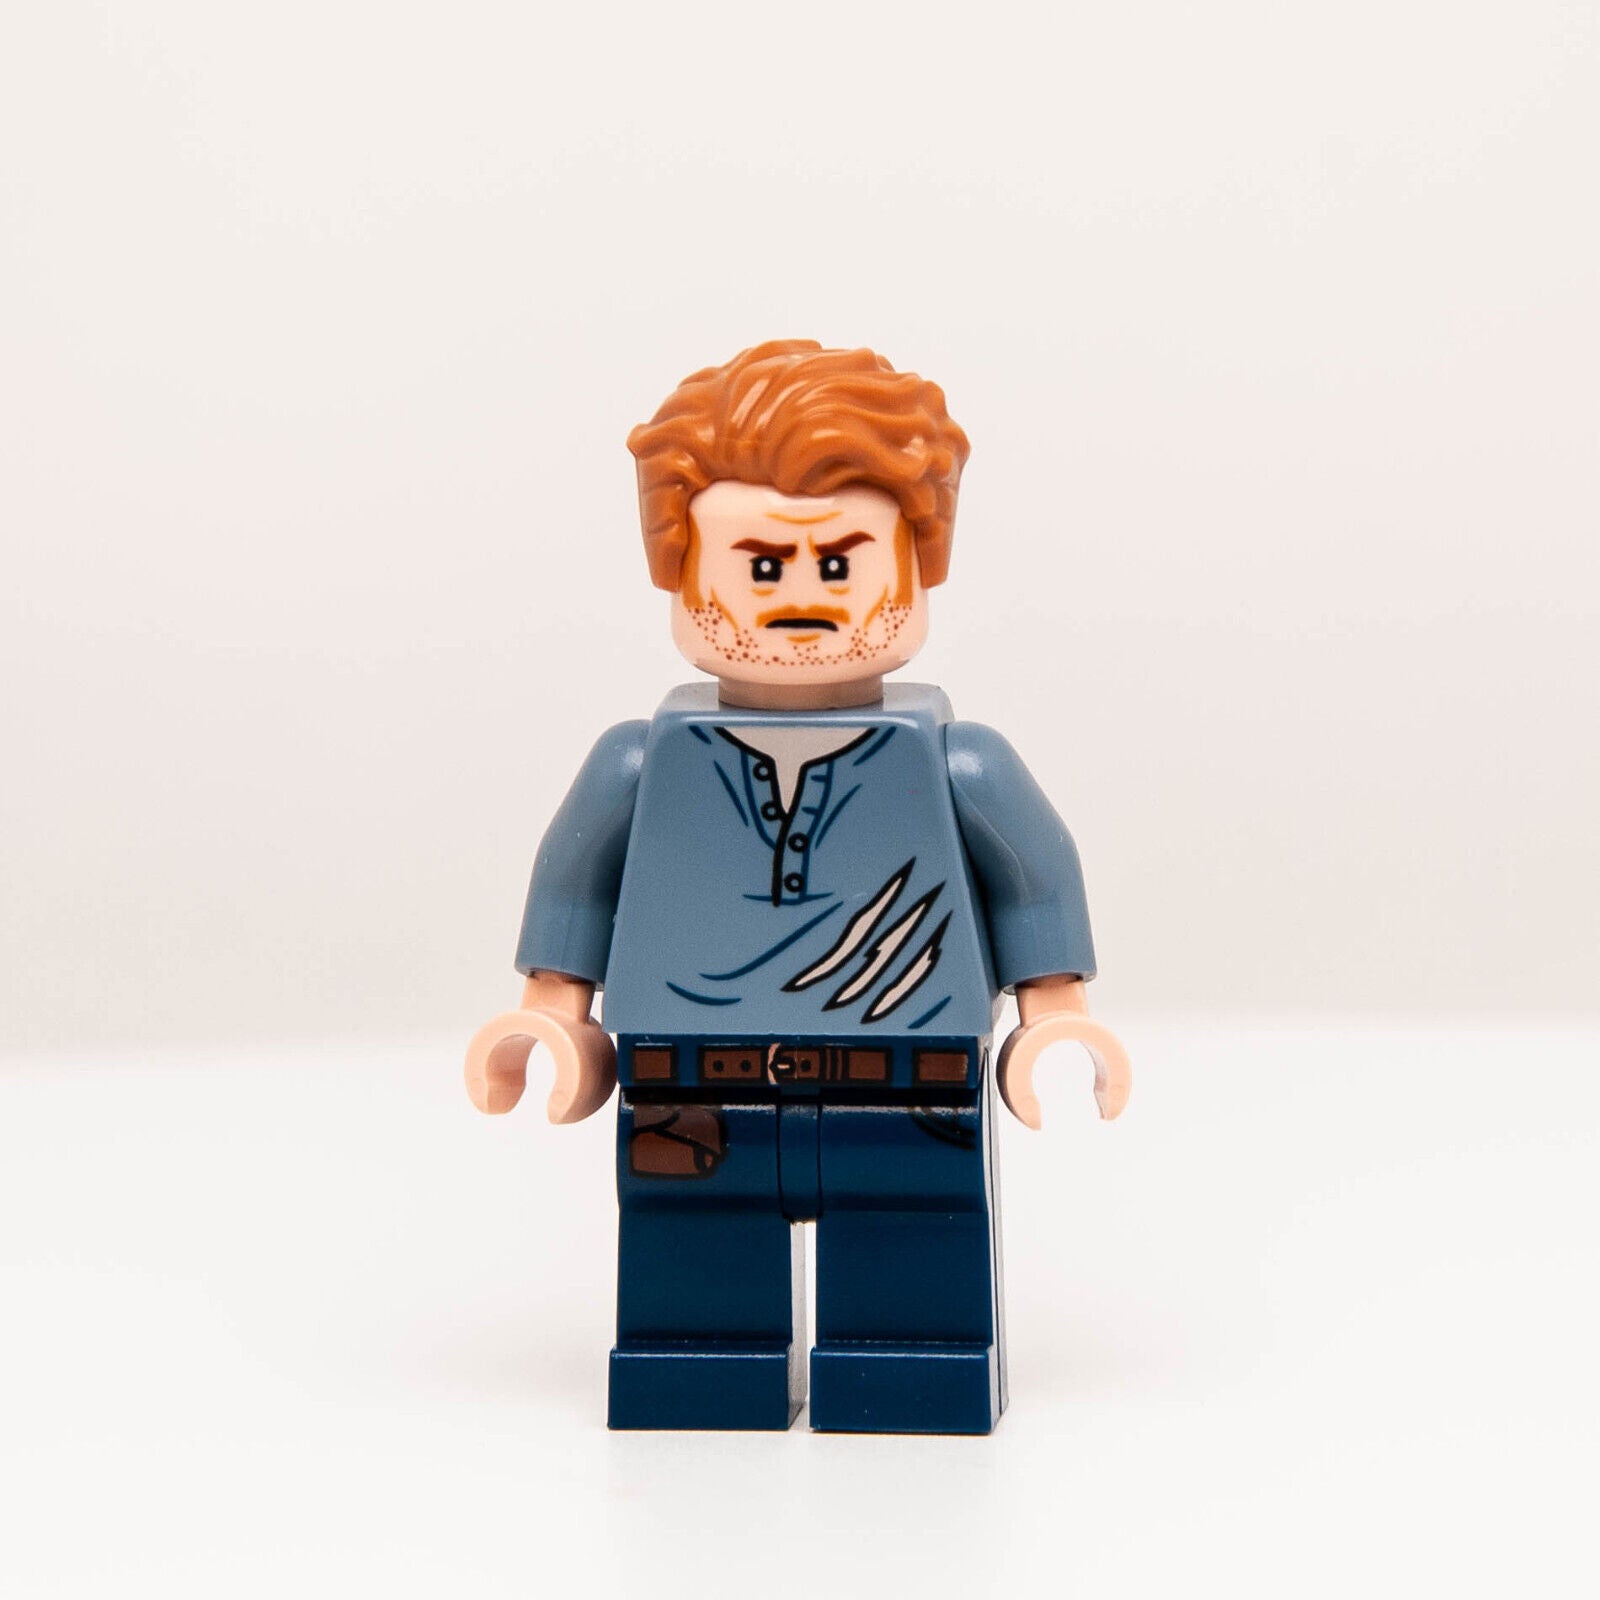 New LEGO Jurassic World Minifigure - Owen Grady Ripped Shirt Set 75929 (jw020)